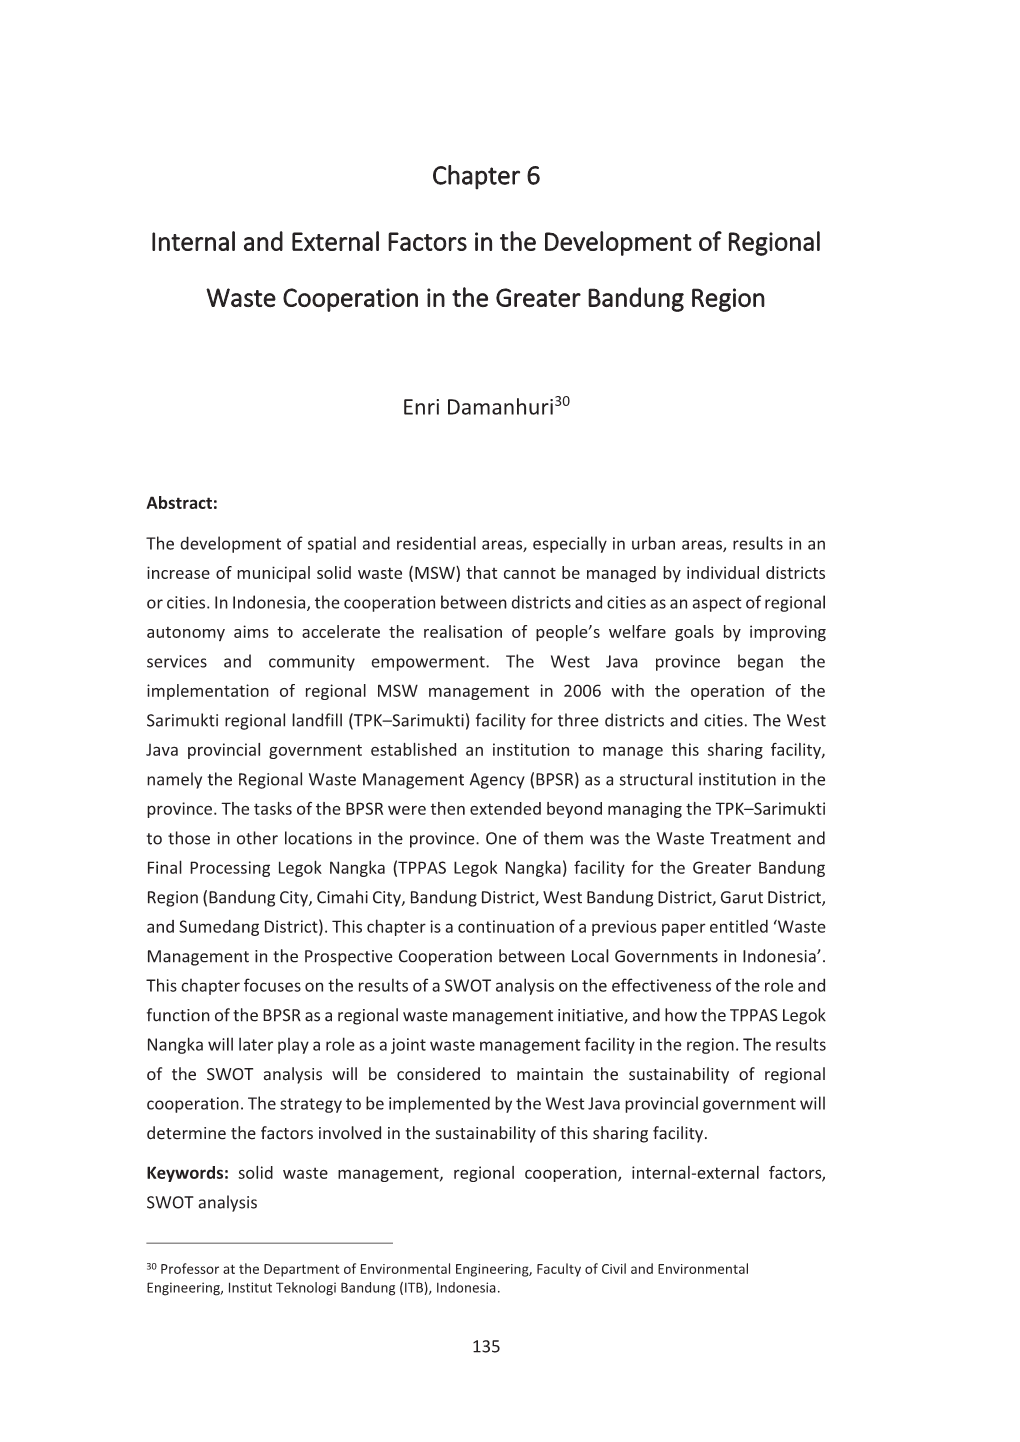 Internal and External Factors in the Development of Regional